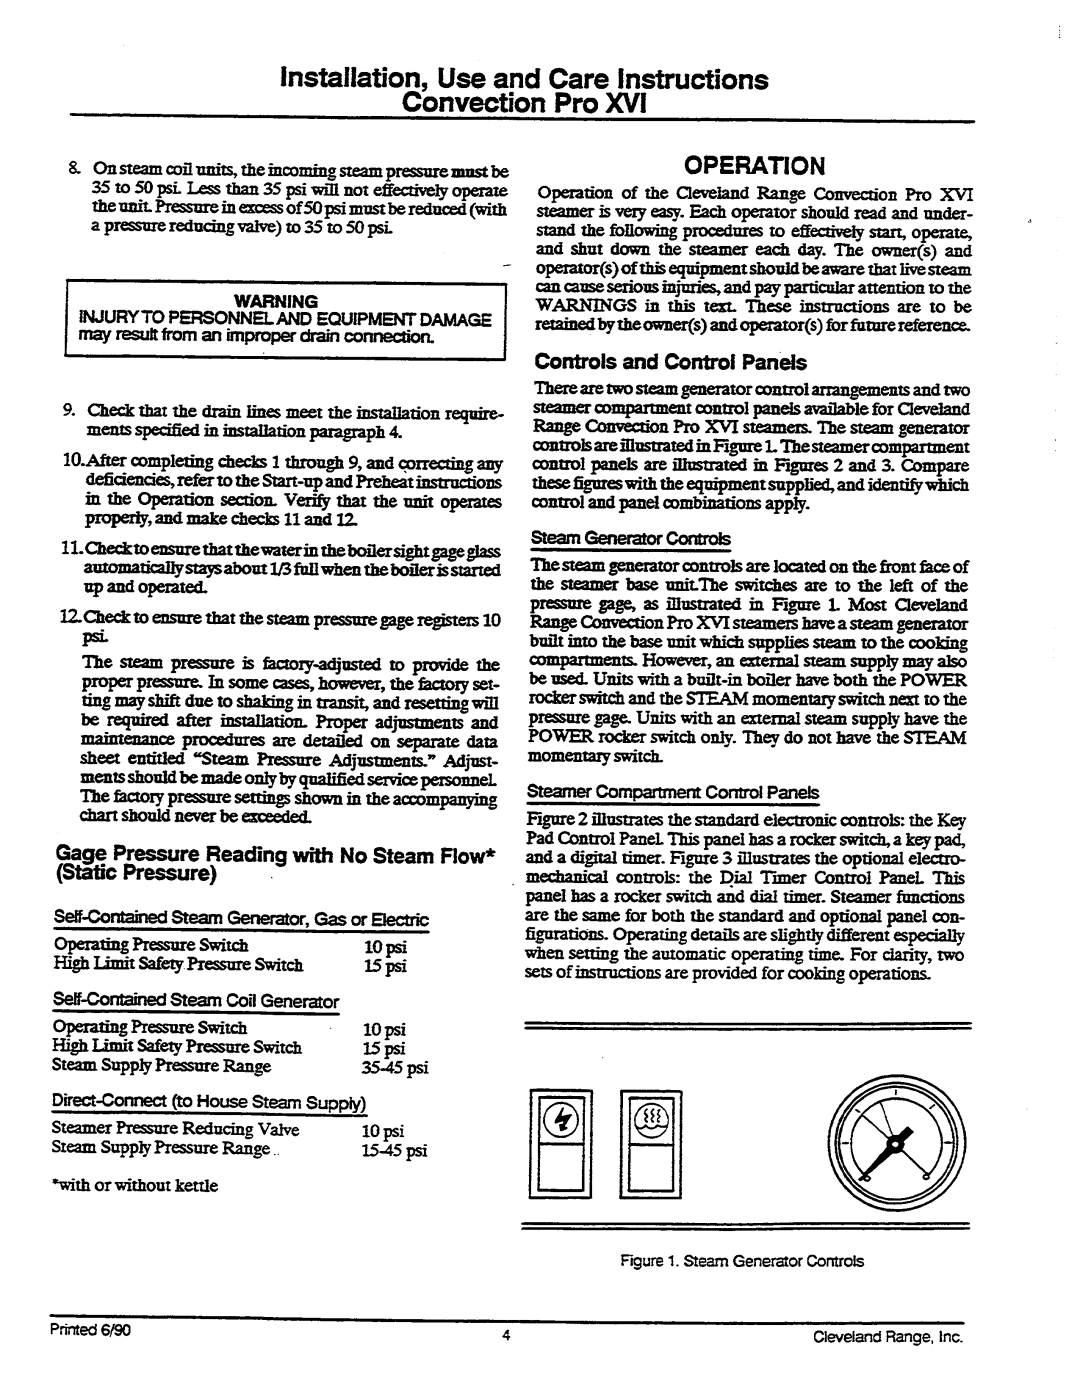 Cleveland Range 36CSM16, 36CGM16, 36CDM16 service manual 